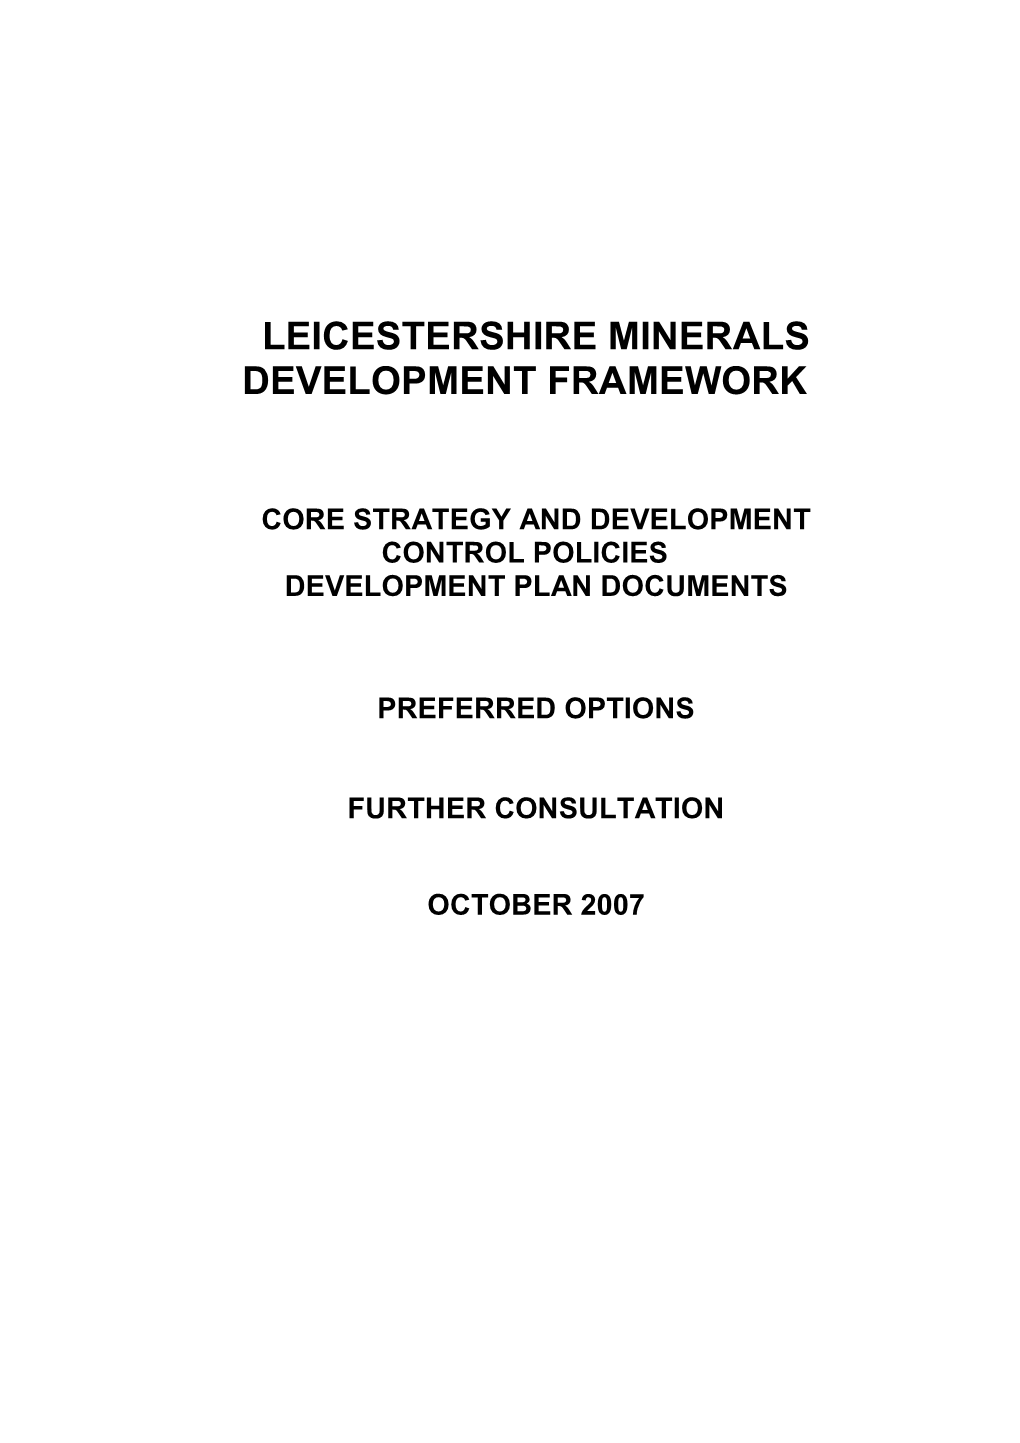 Leicestershire Minerals Development Framework